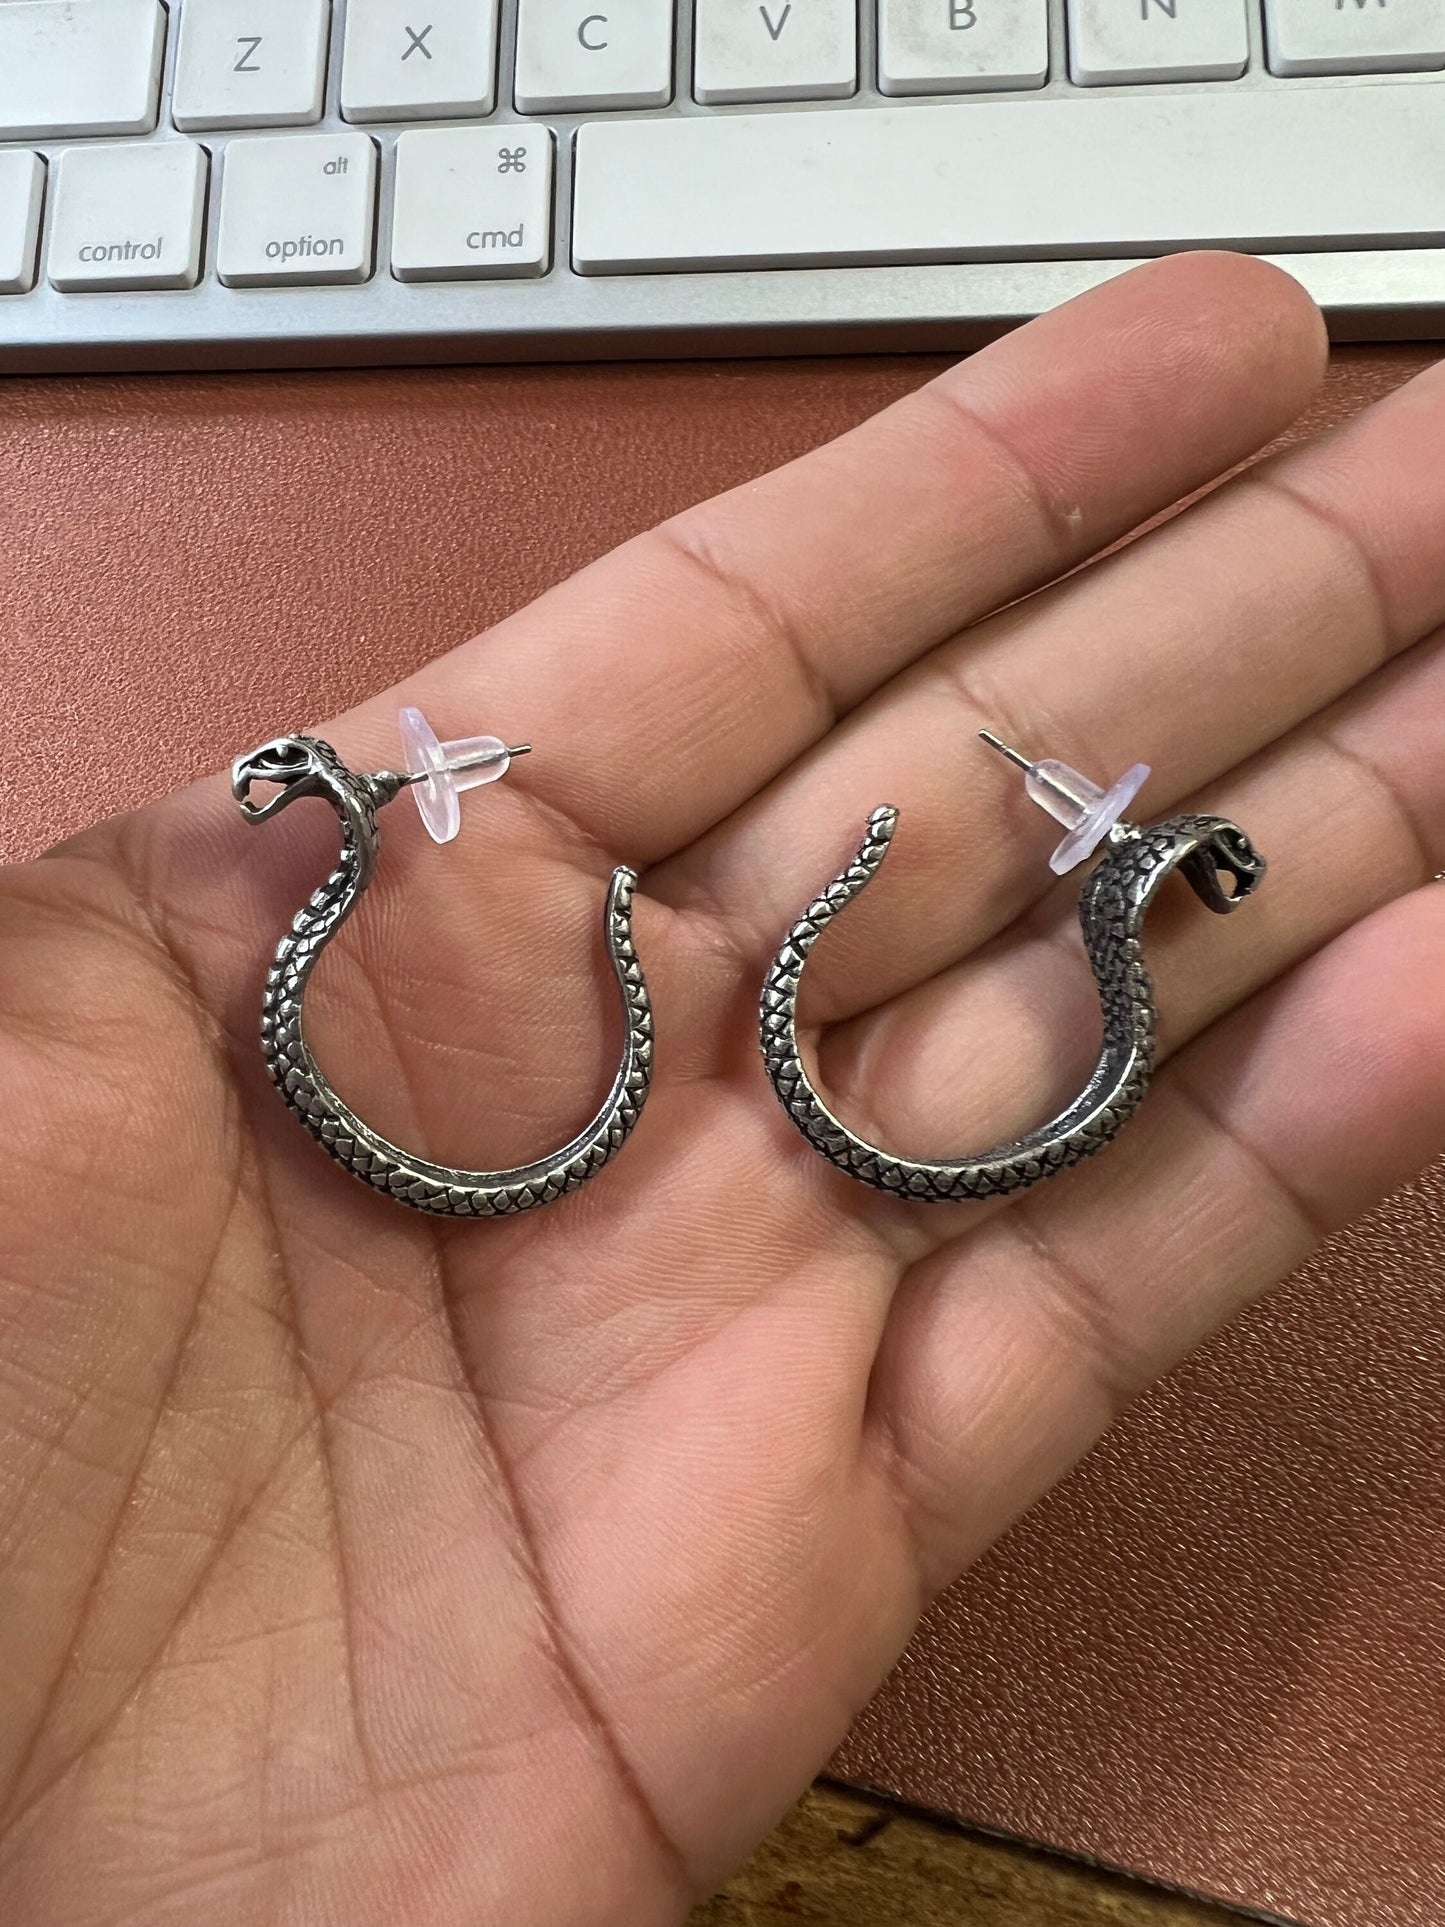 Pair of King Cobra Snake Stud Post Earrings (#6)